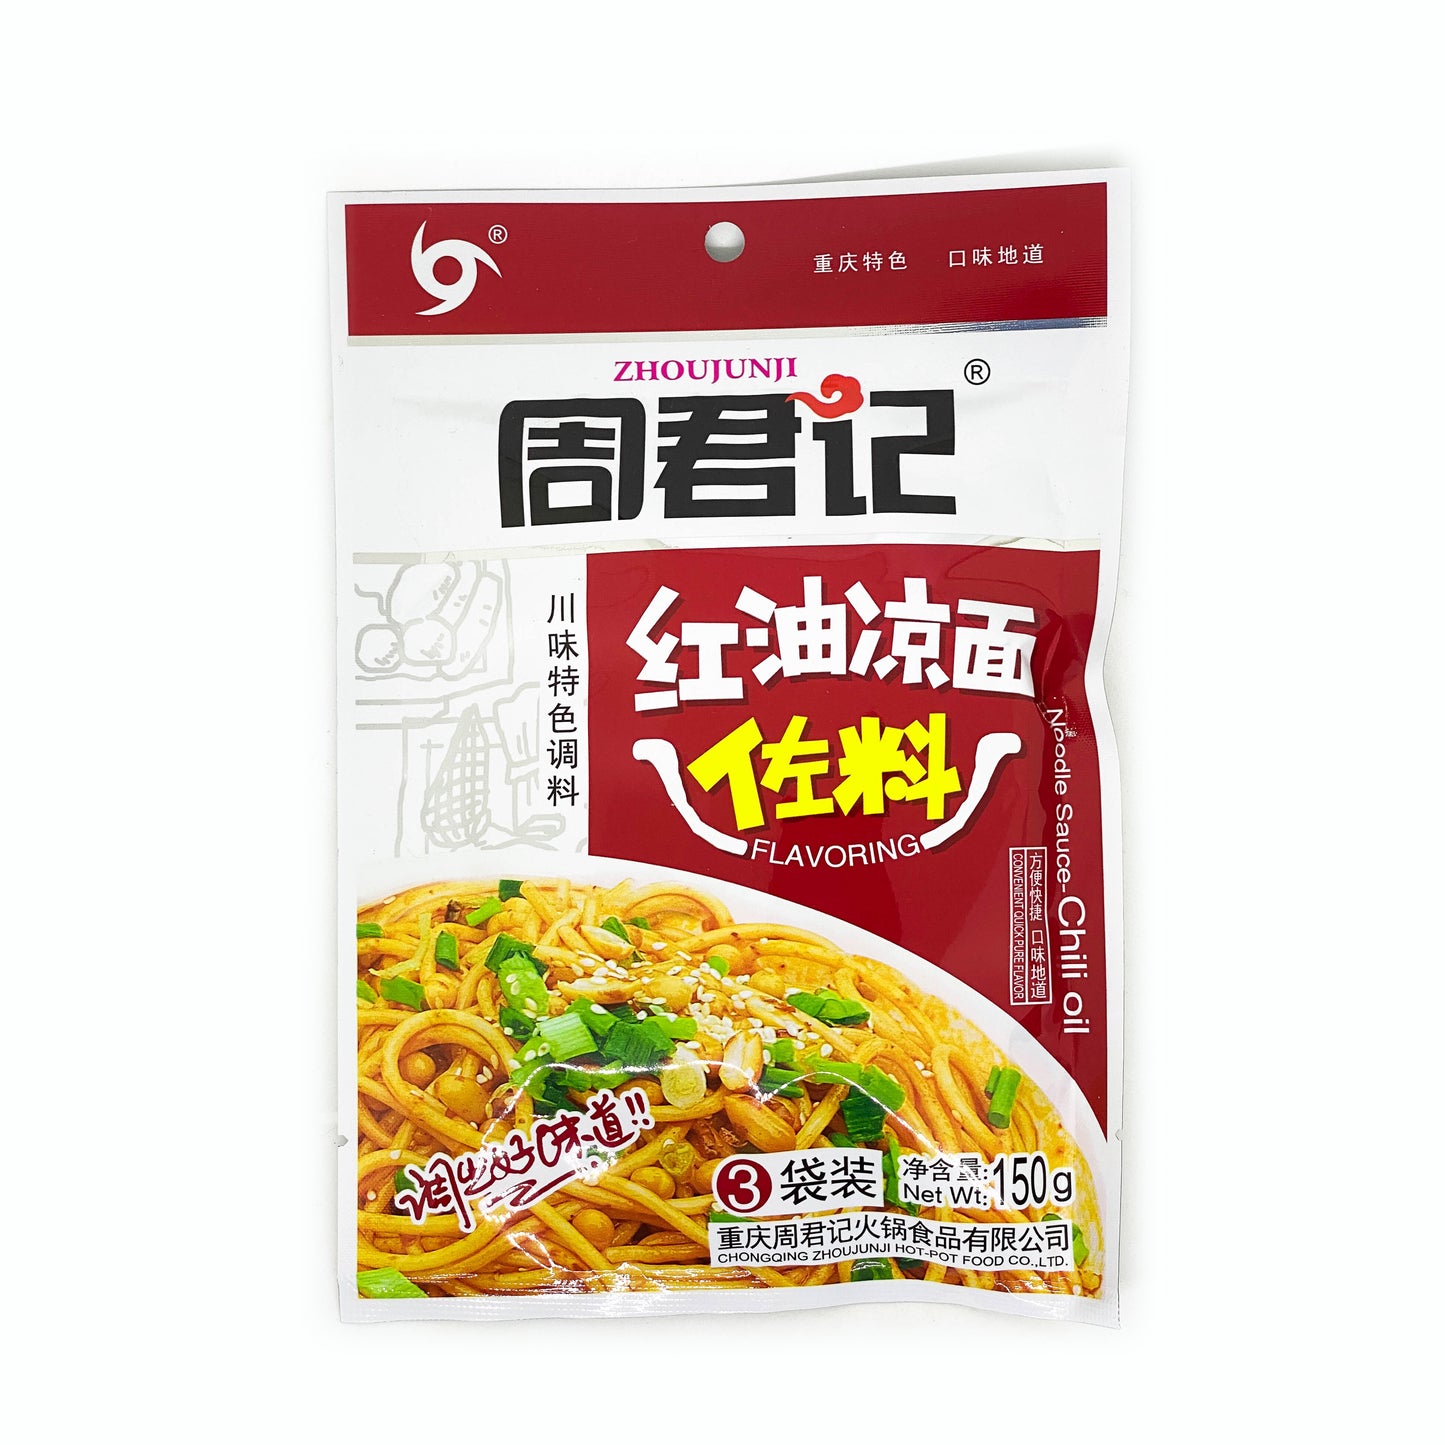 Noodle Sauce - Chili Oil 周君記 紅油涼麵佐料